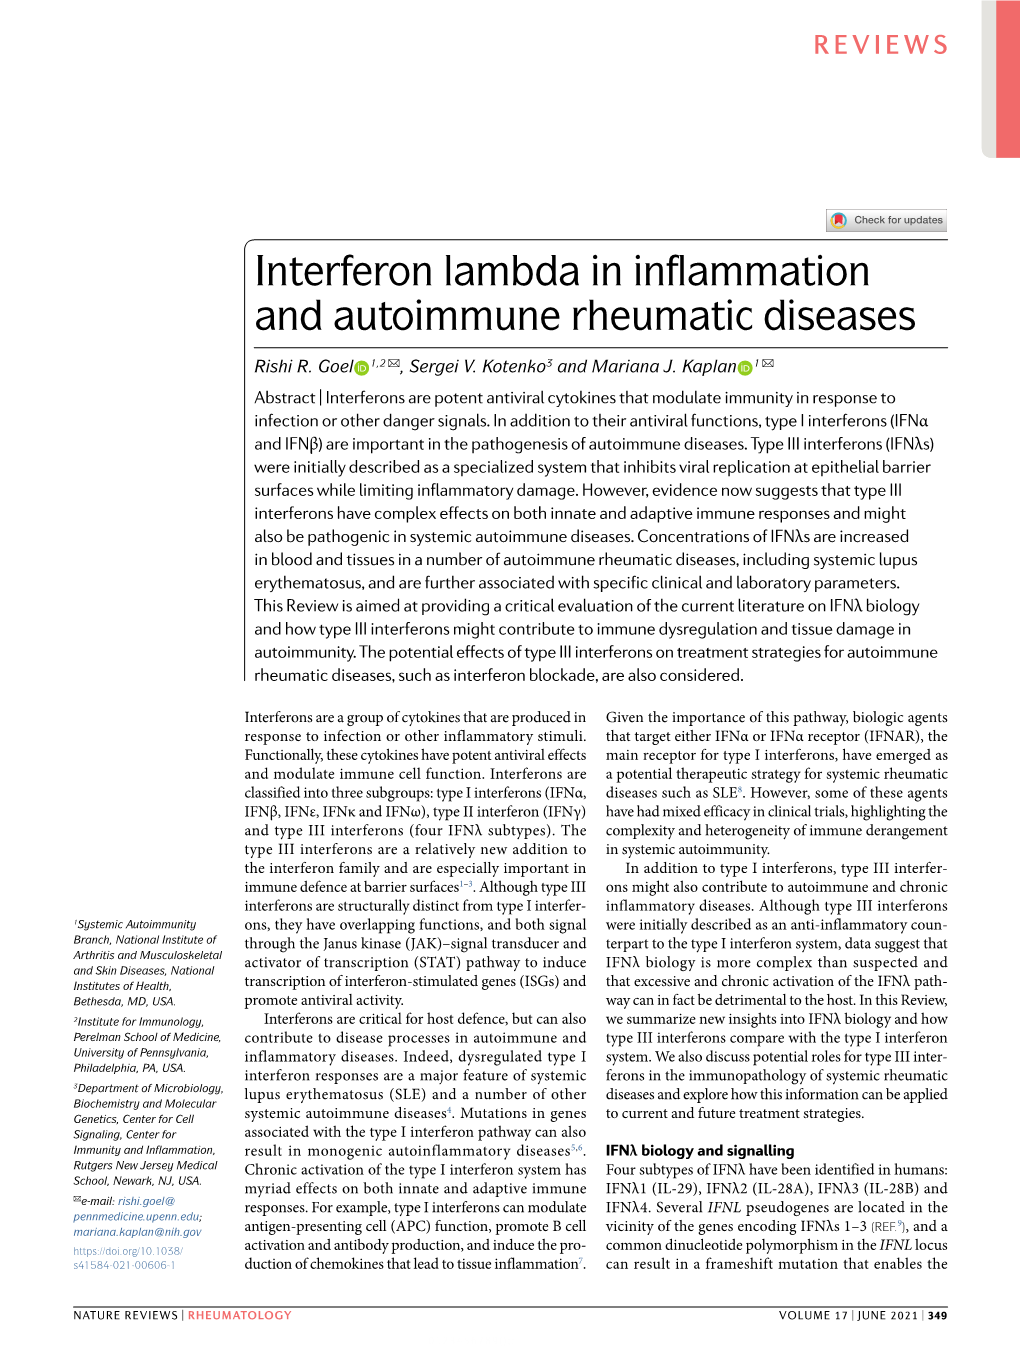 Interferon Lambda in Inflammation and Autoimmune Rheumatic Diseases